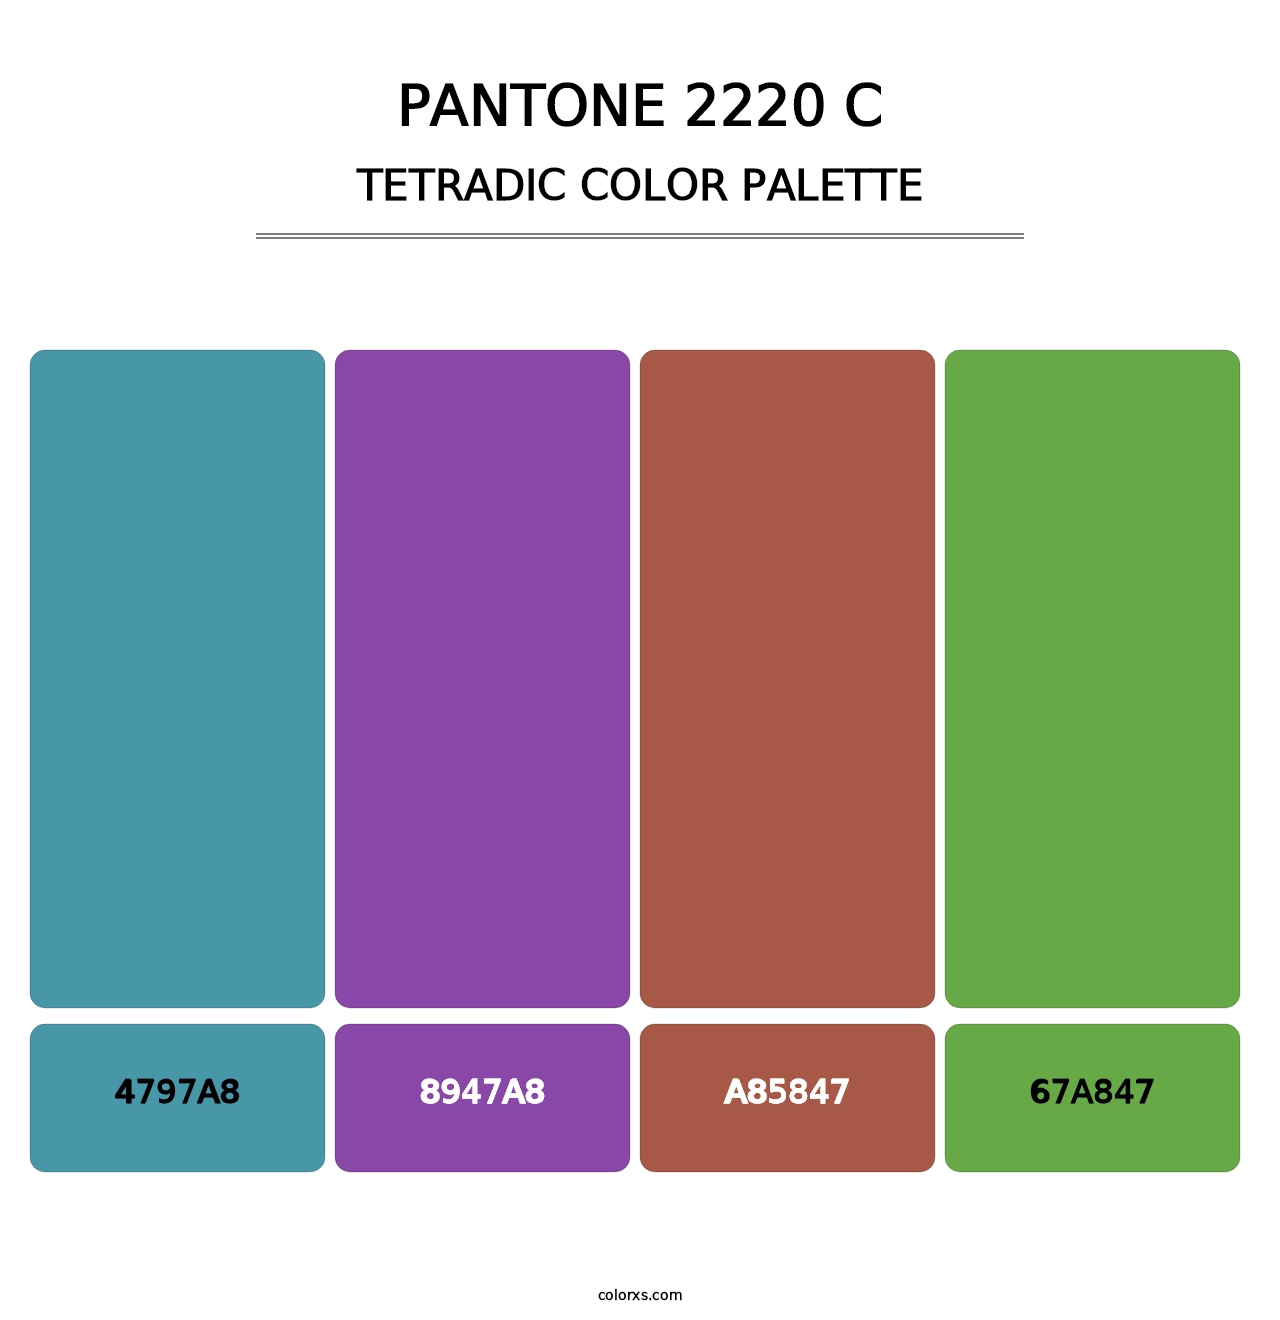 PANTONE 2220 C - Tetradic Color Palette